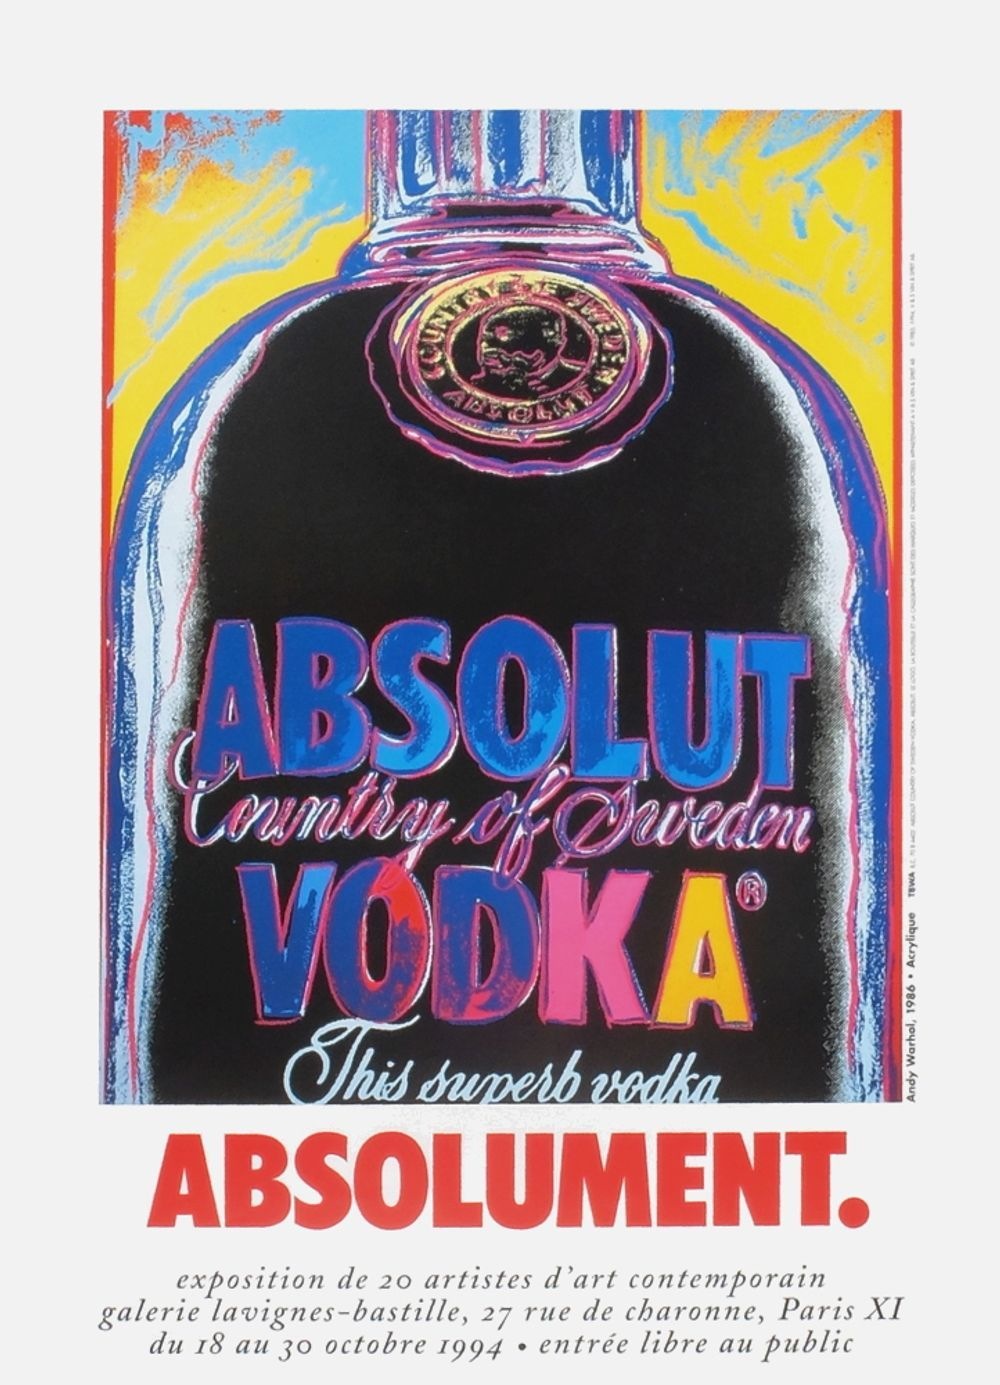 Andy Warhol - Absolut Vodka, 1994